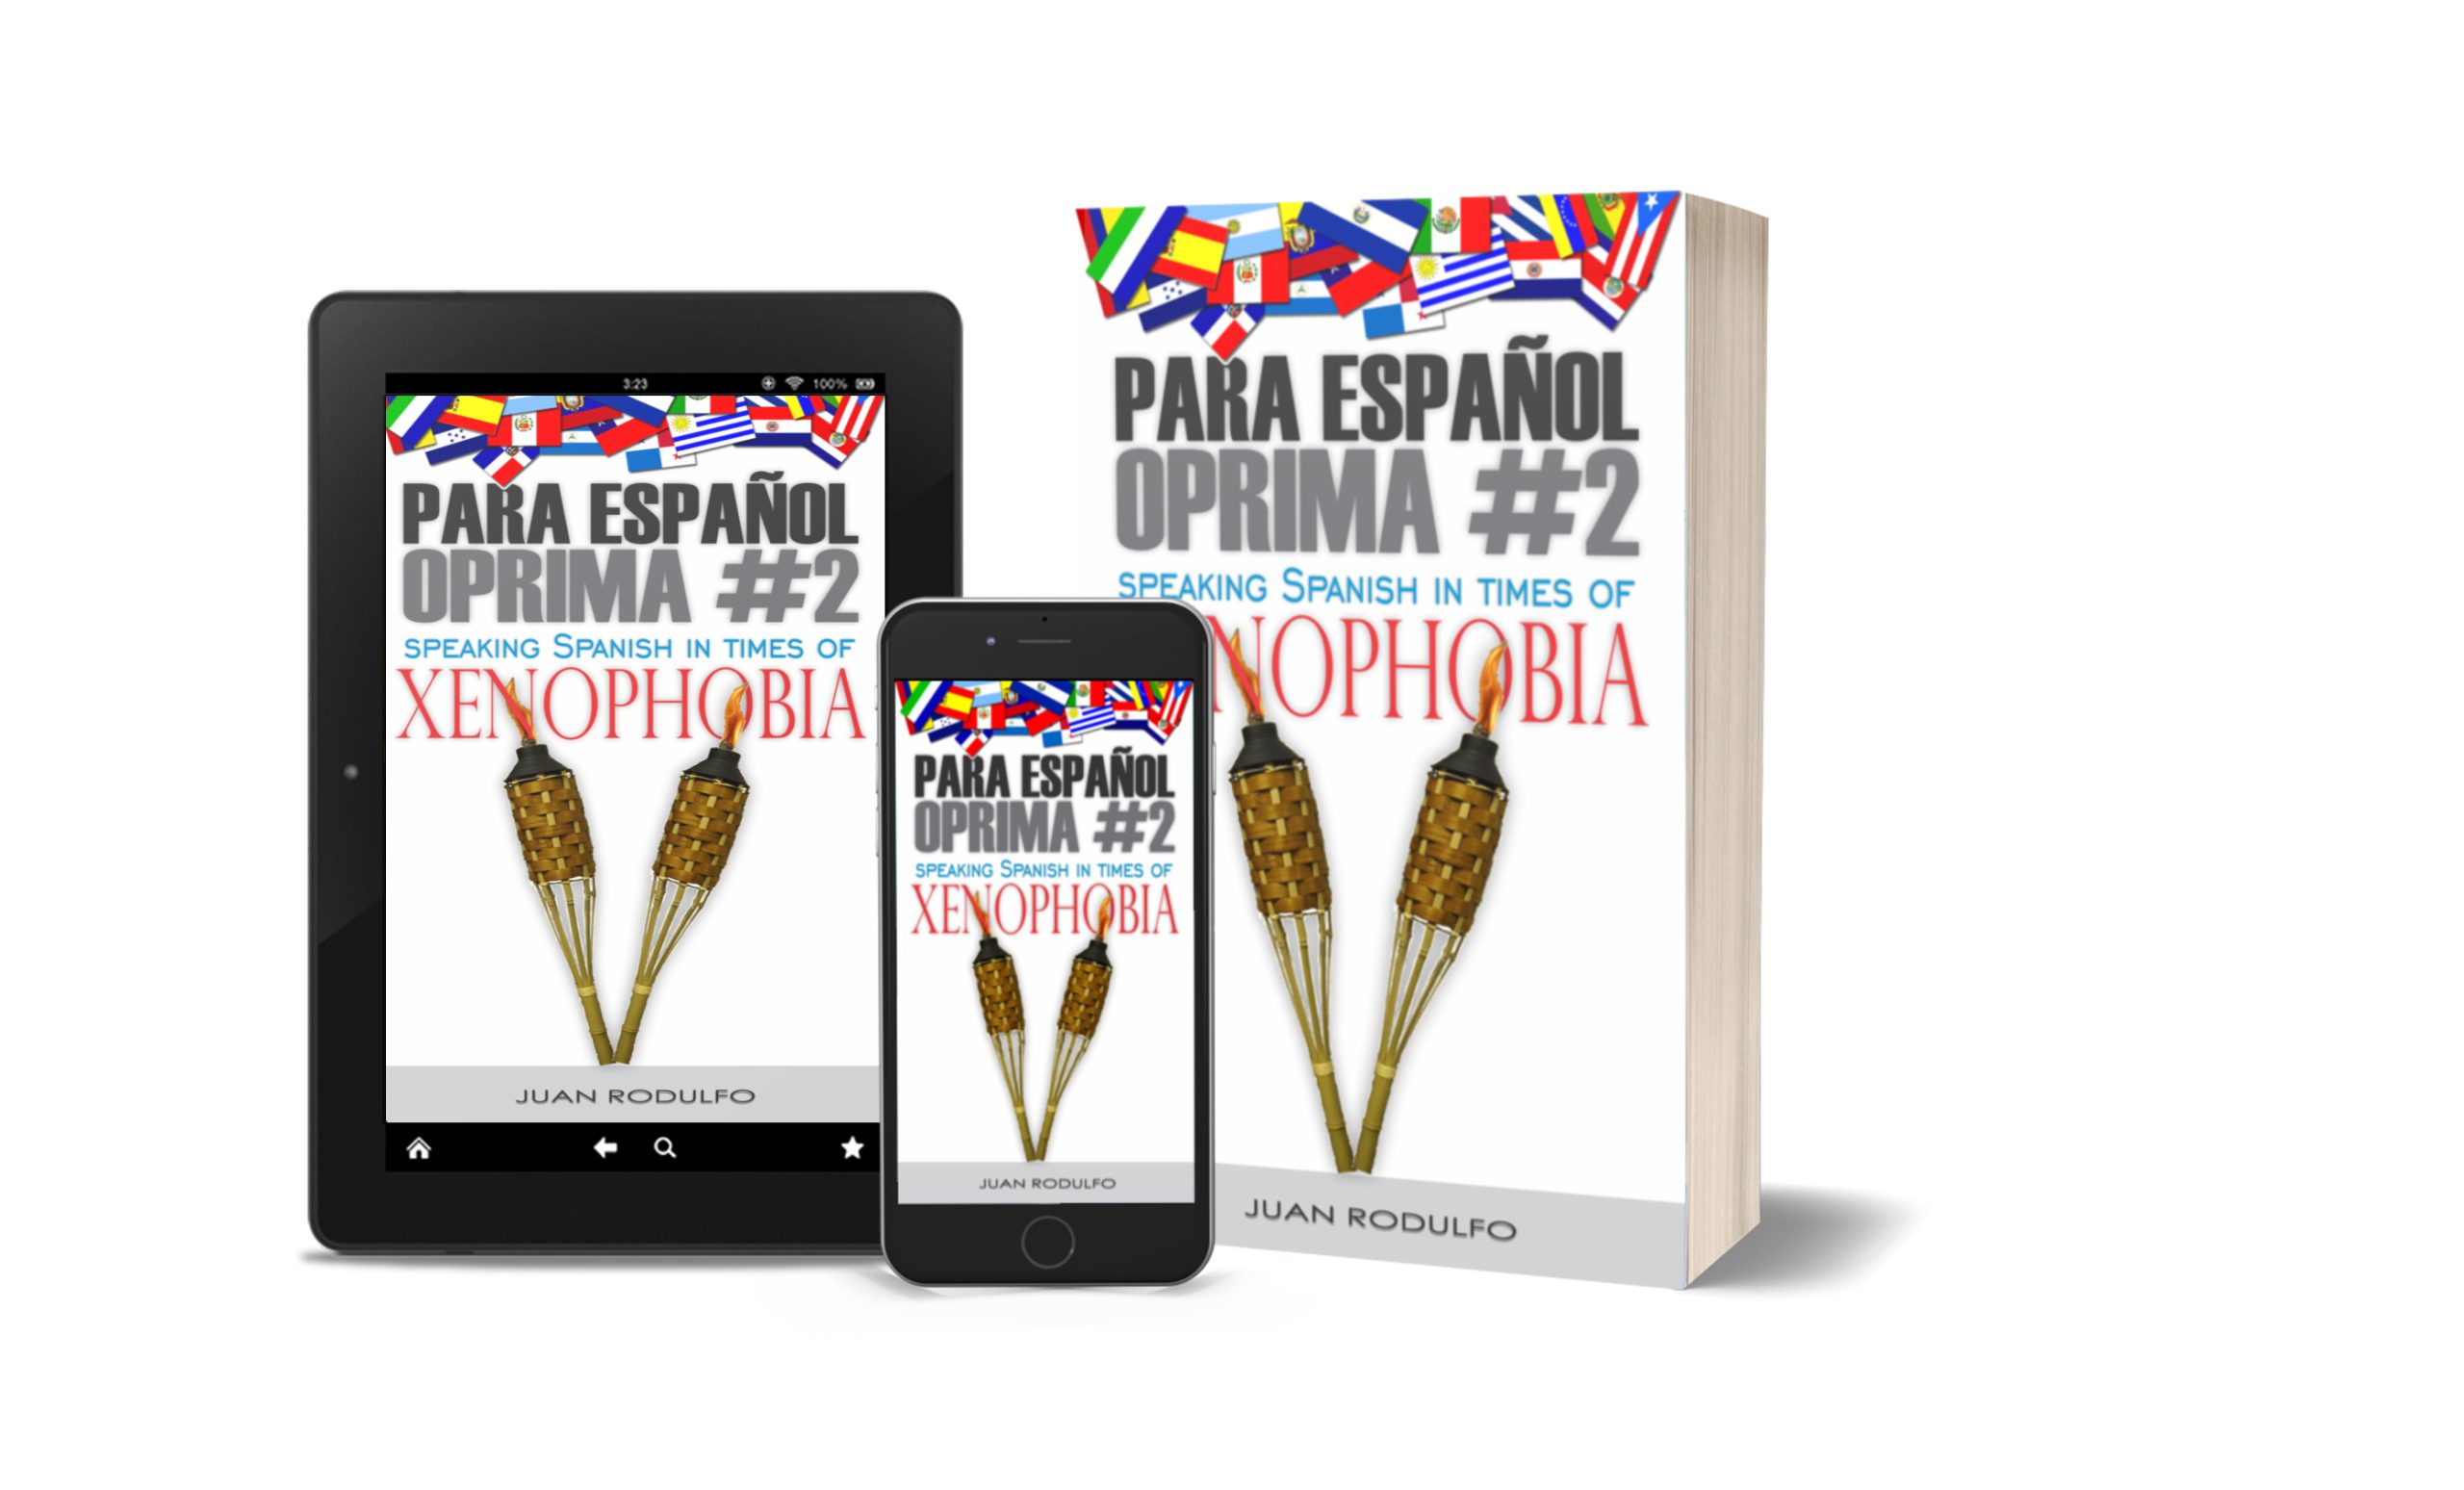 Para Español Oprima 2 Speaking Spanish in times of Xenophobia by Juan Rodulfo